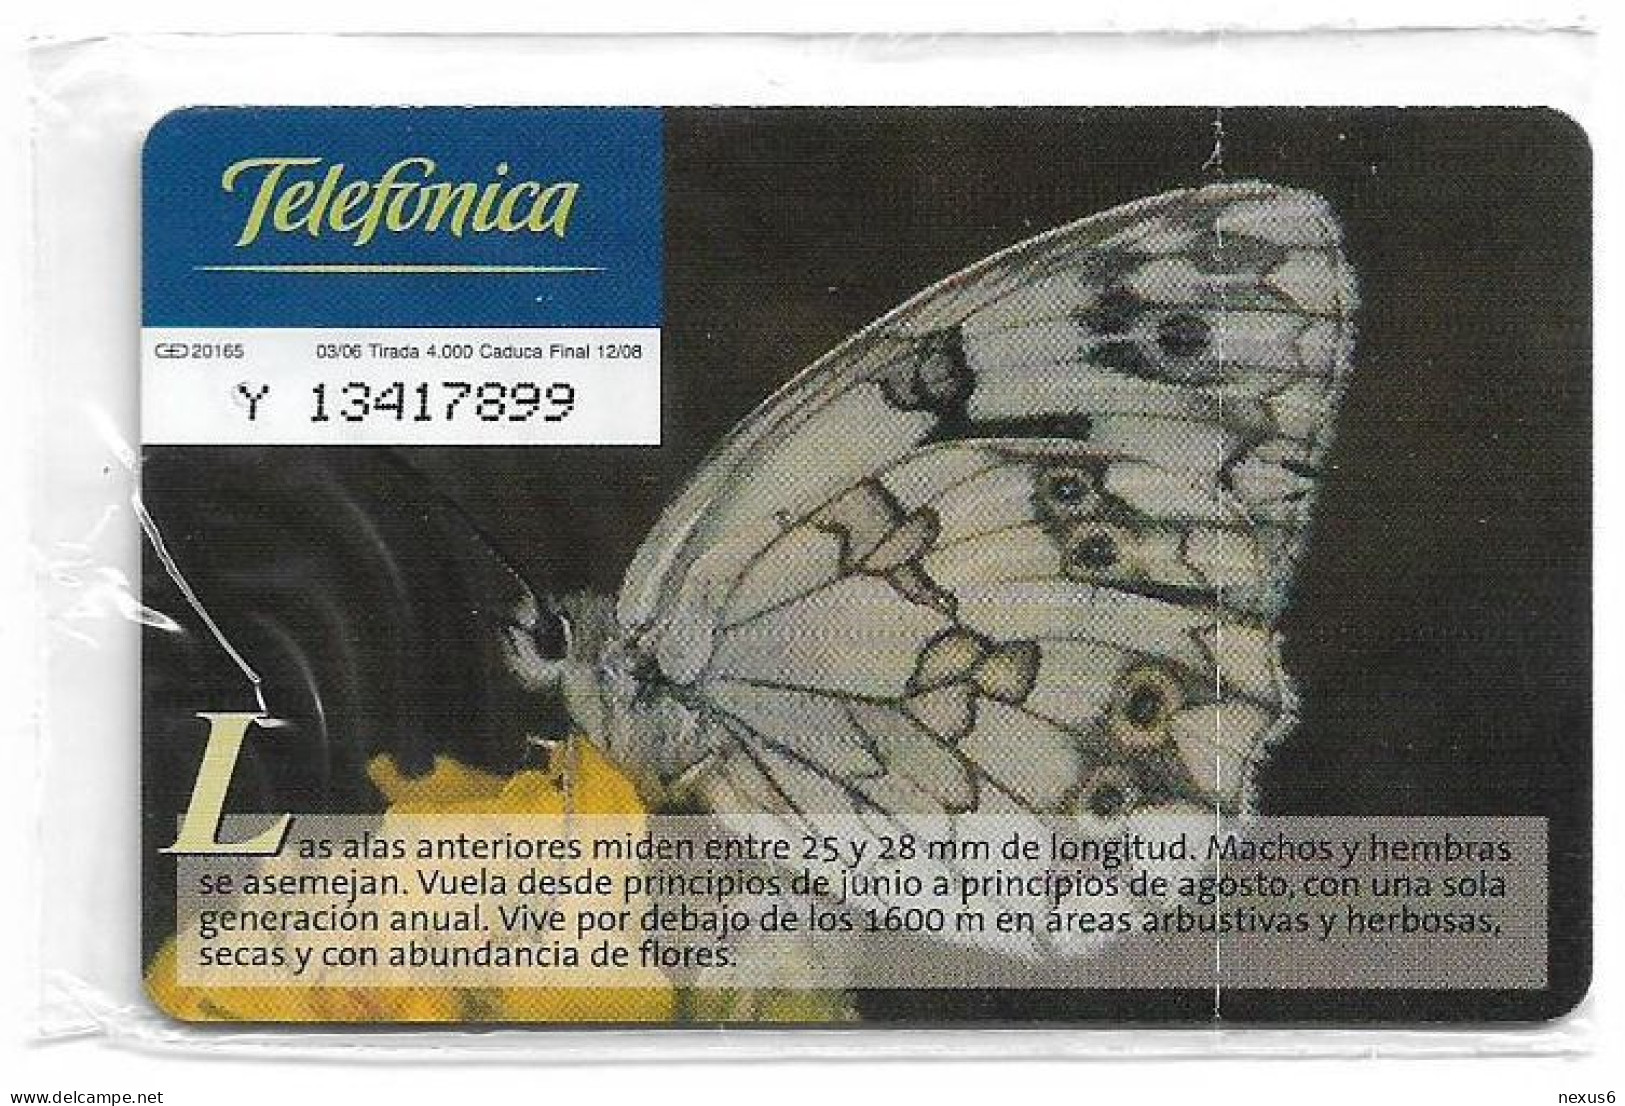 Spain - Telefonica - Fauna Iberica - Mariposa Melanargia, Butterfly - P-583 - 03.2006, 3€, 4.000ex, NSB - Privé-uitgaven